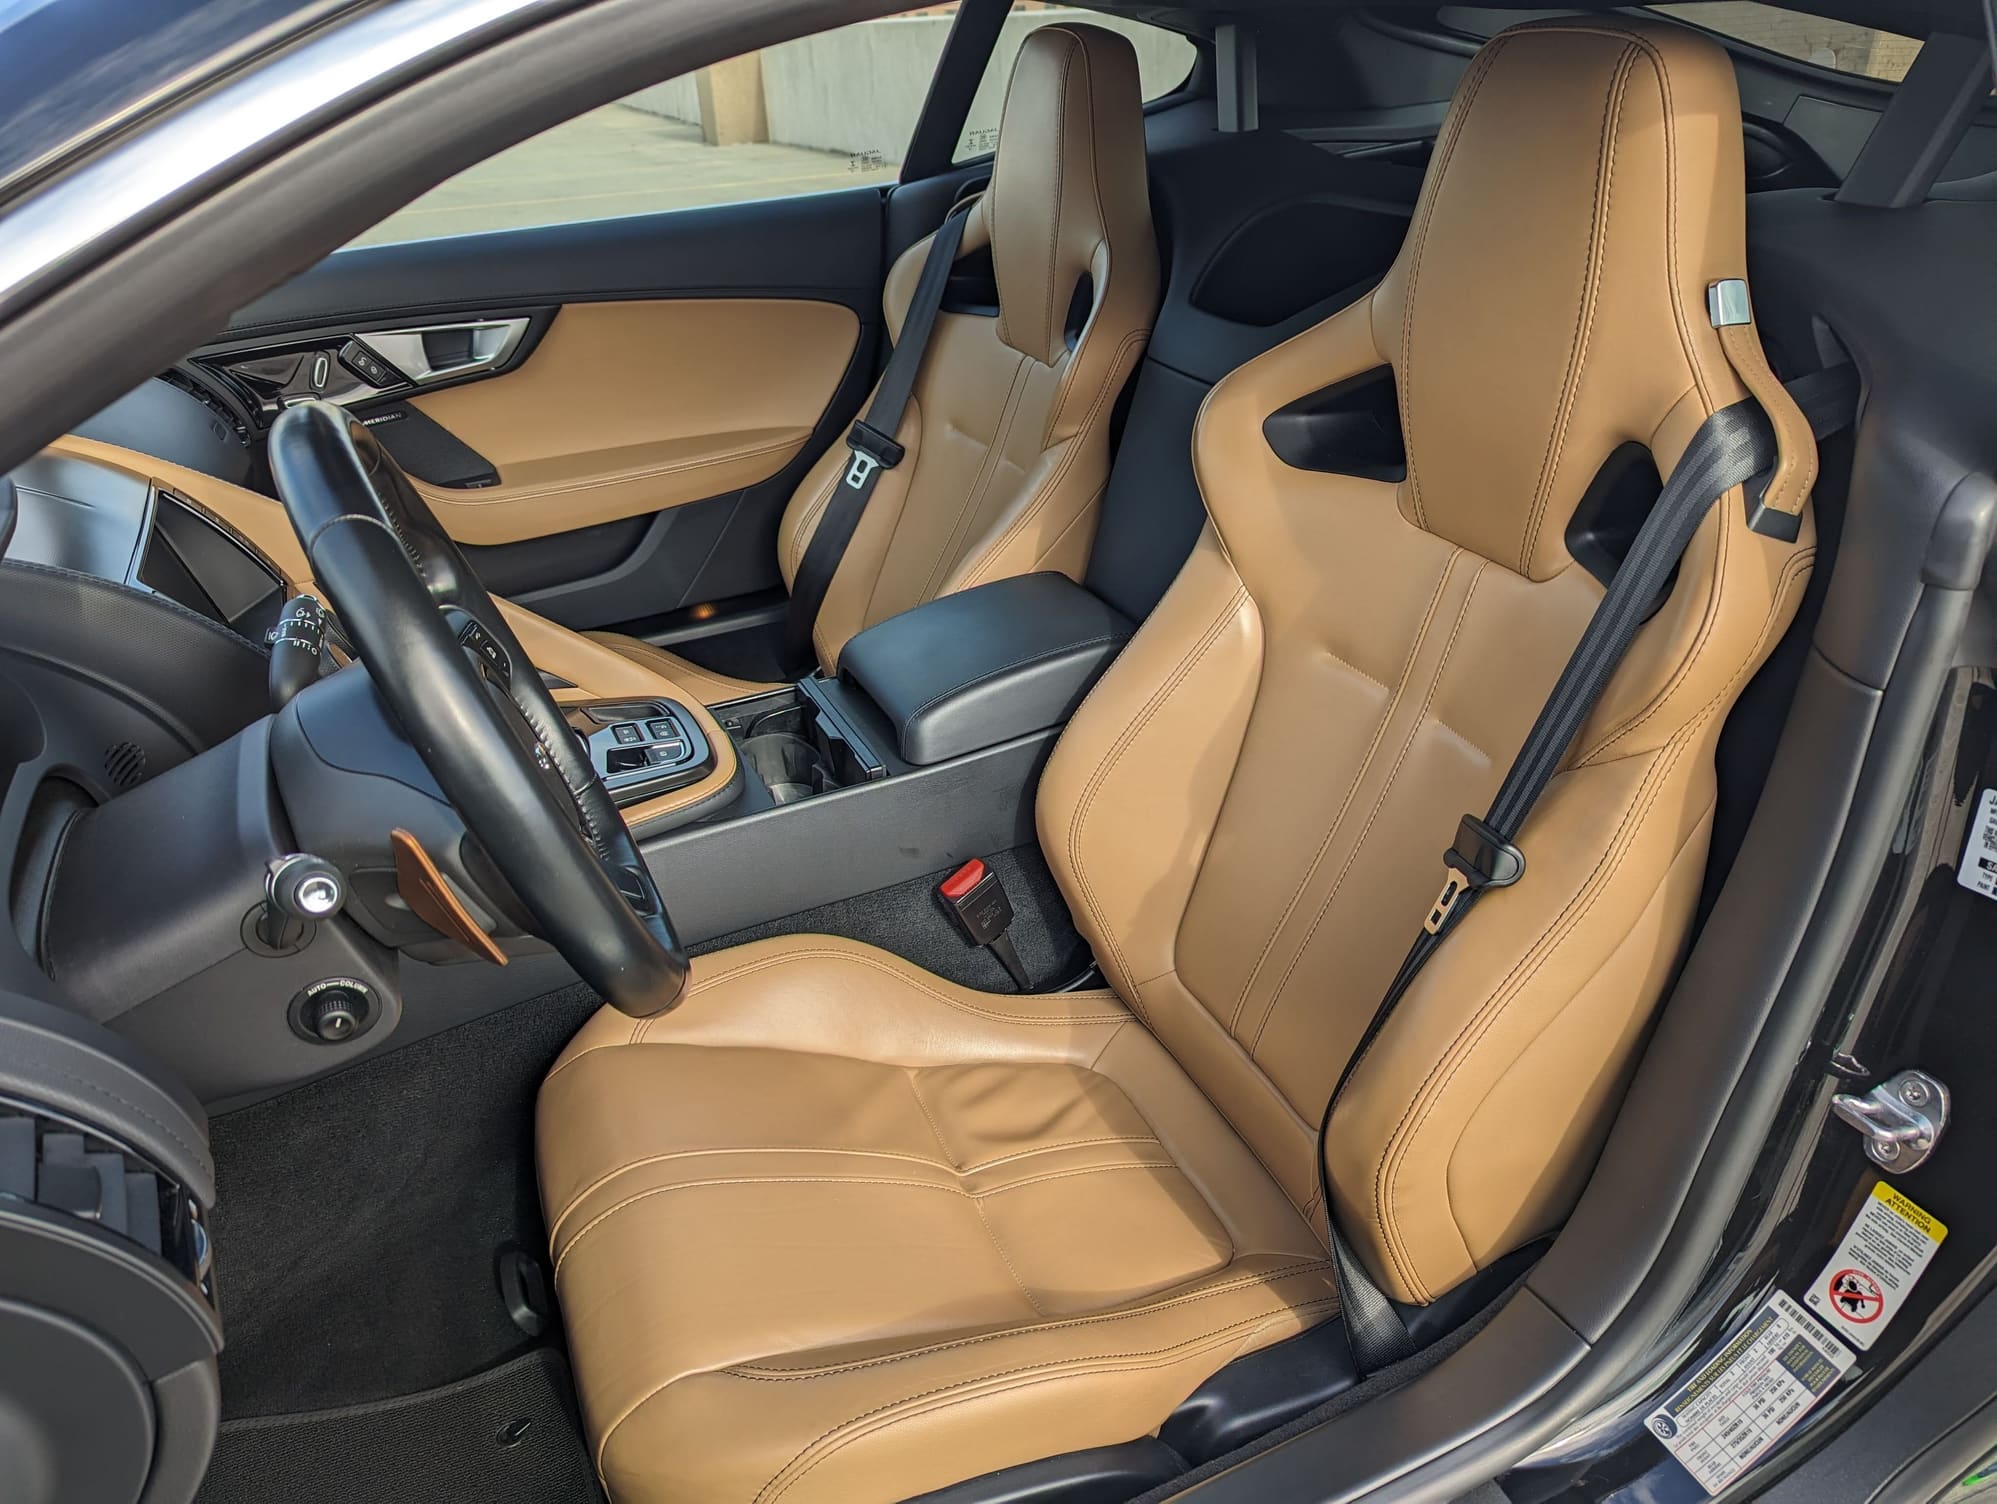 2015 Jaguar F-Type - 2015 F Type S - Metallic Black / Camel Leather - $36k - Used - VIN SAJWA6BU6F8K17624 - 6 cyl - 2WD - Automatic - Coupe - Black - Portsmouth, NH 03801, United States